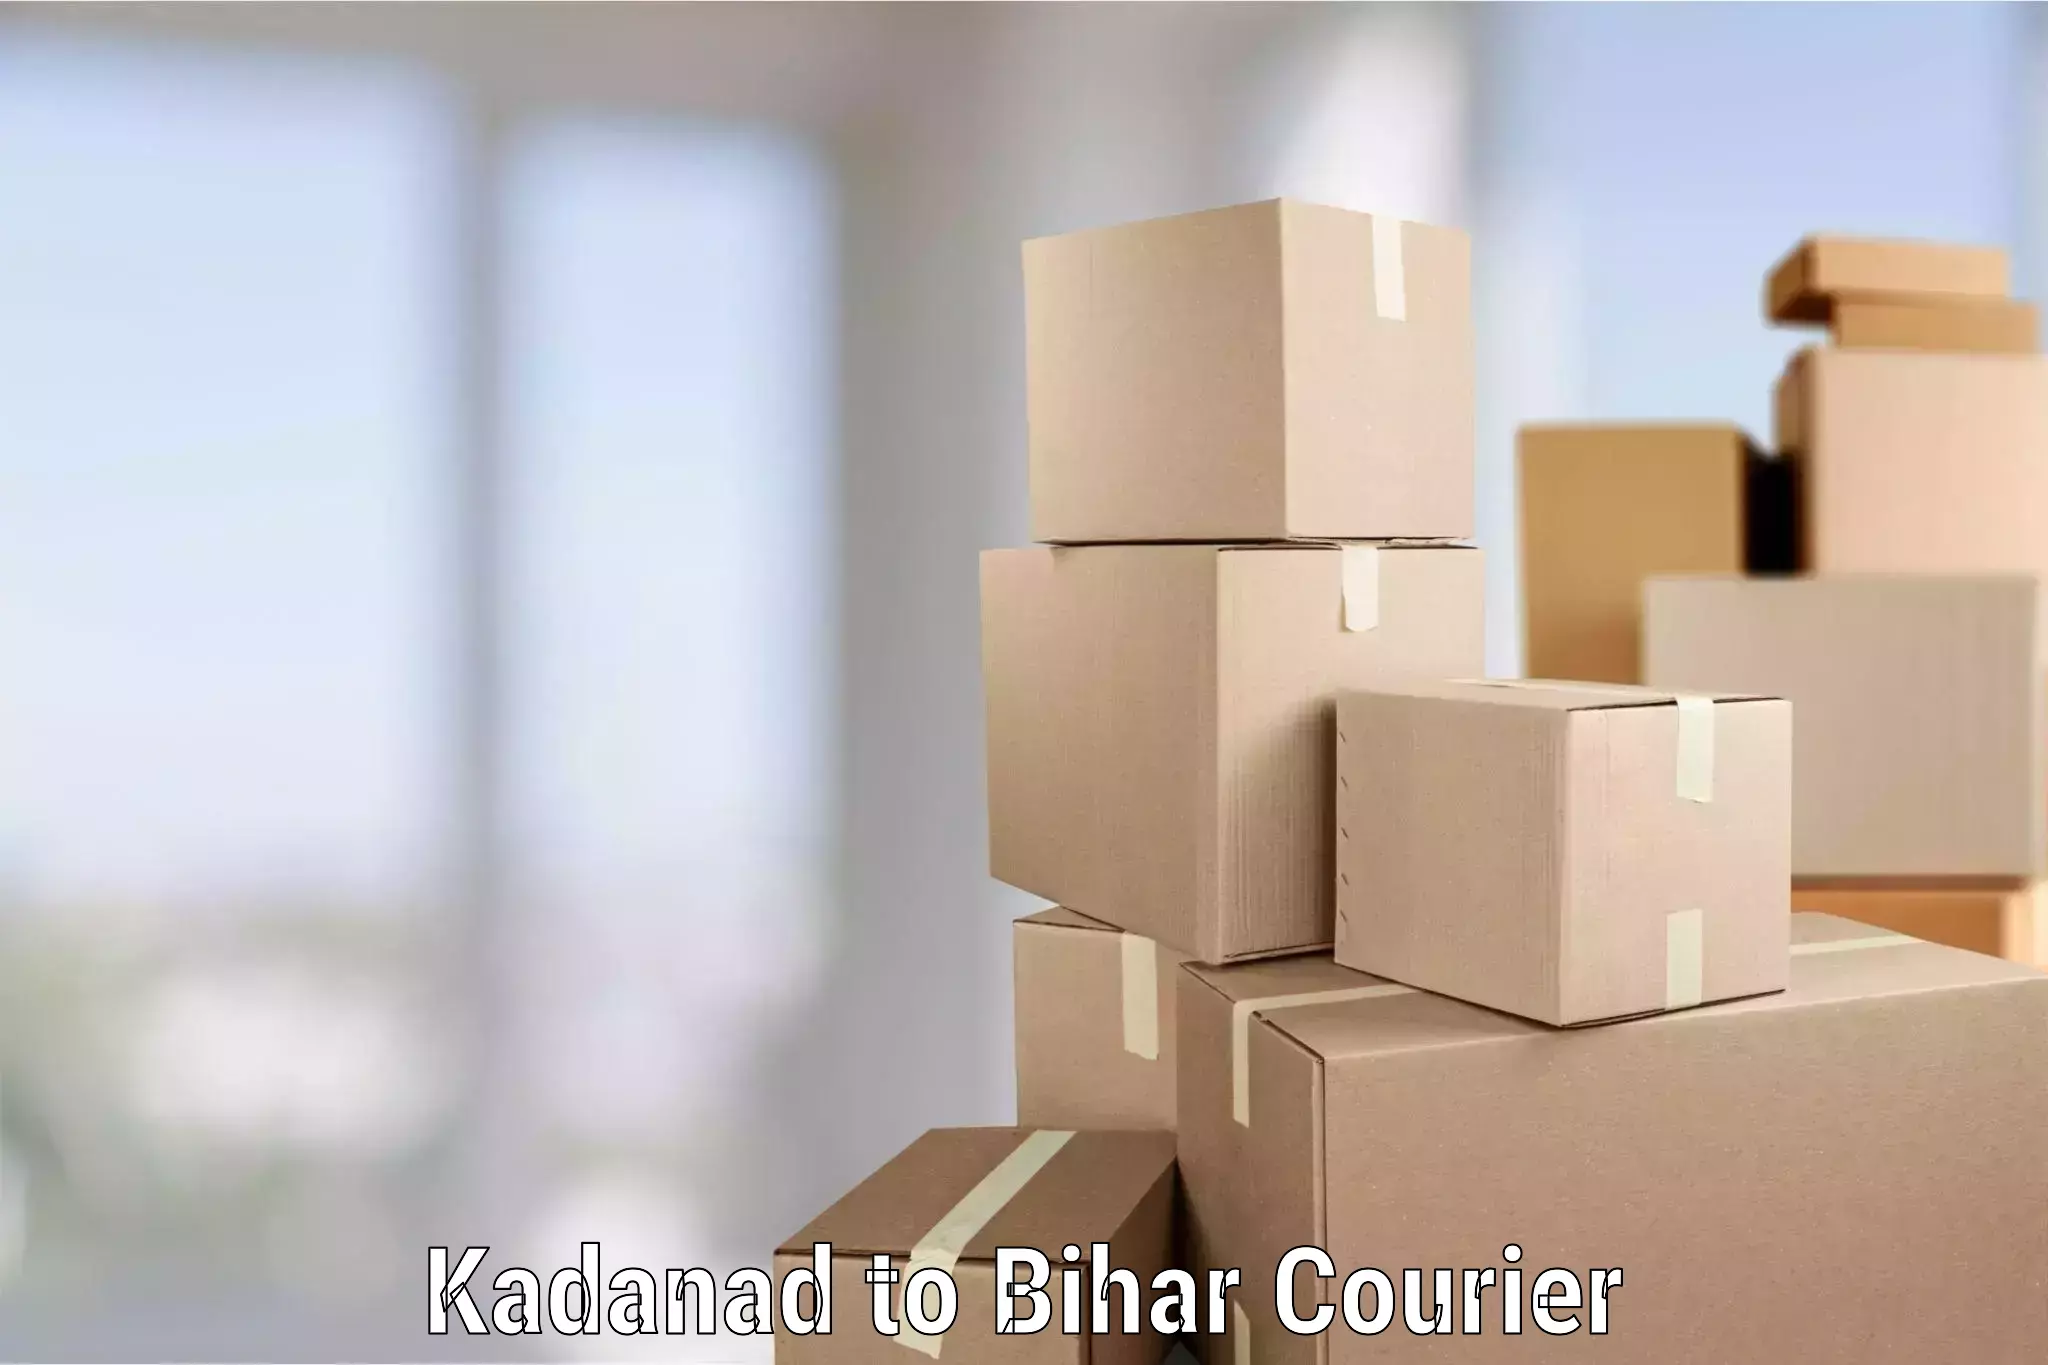 Furniture delivery service Kadanad to Arrah